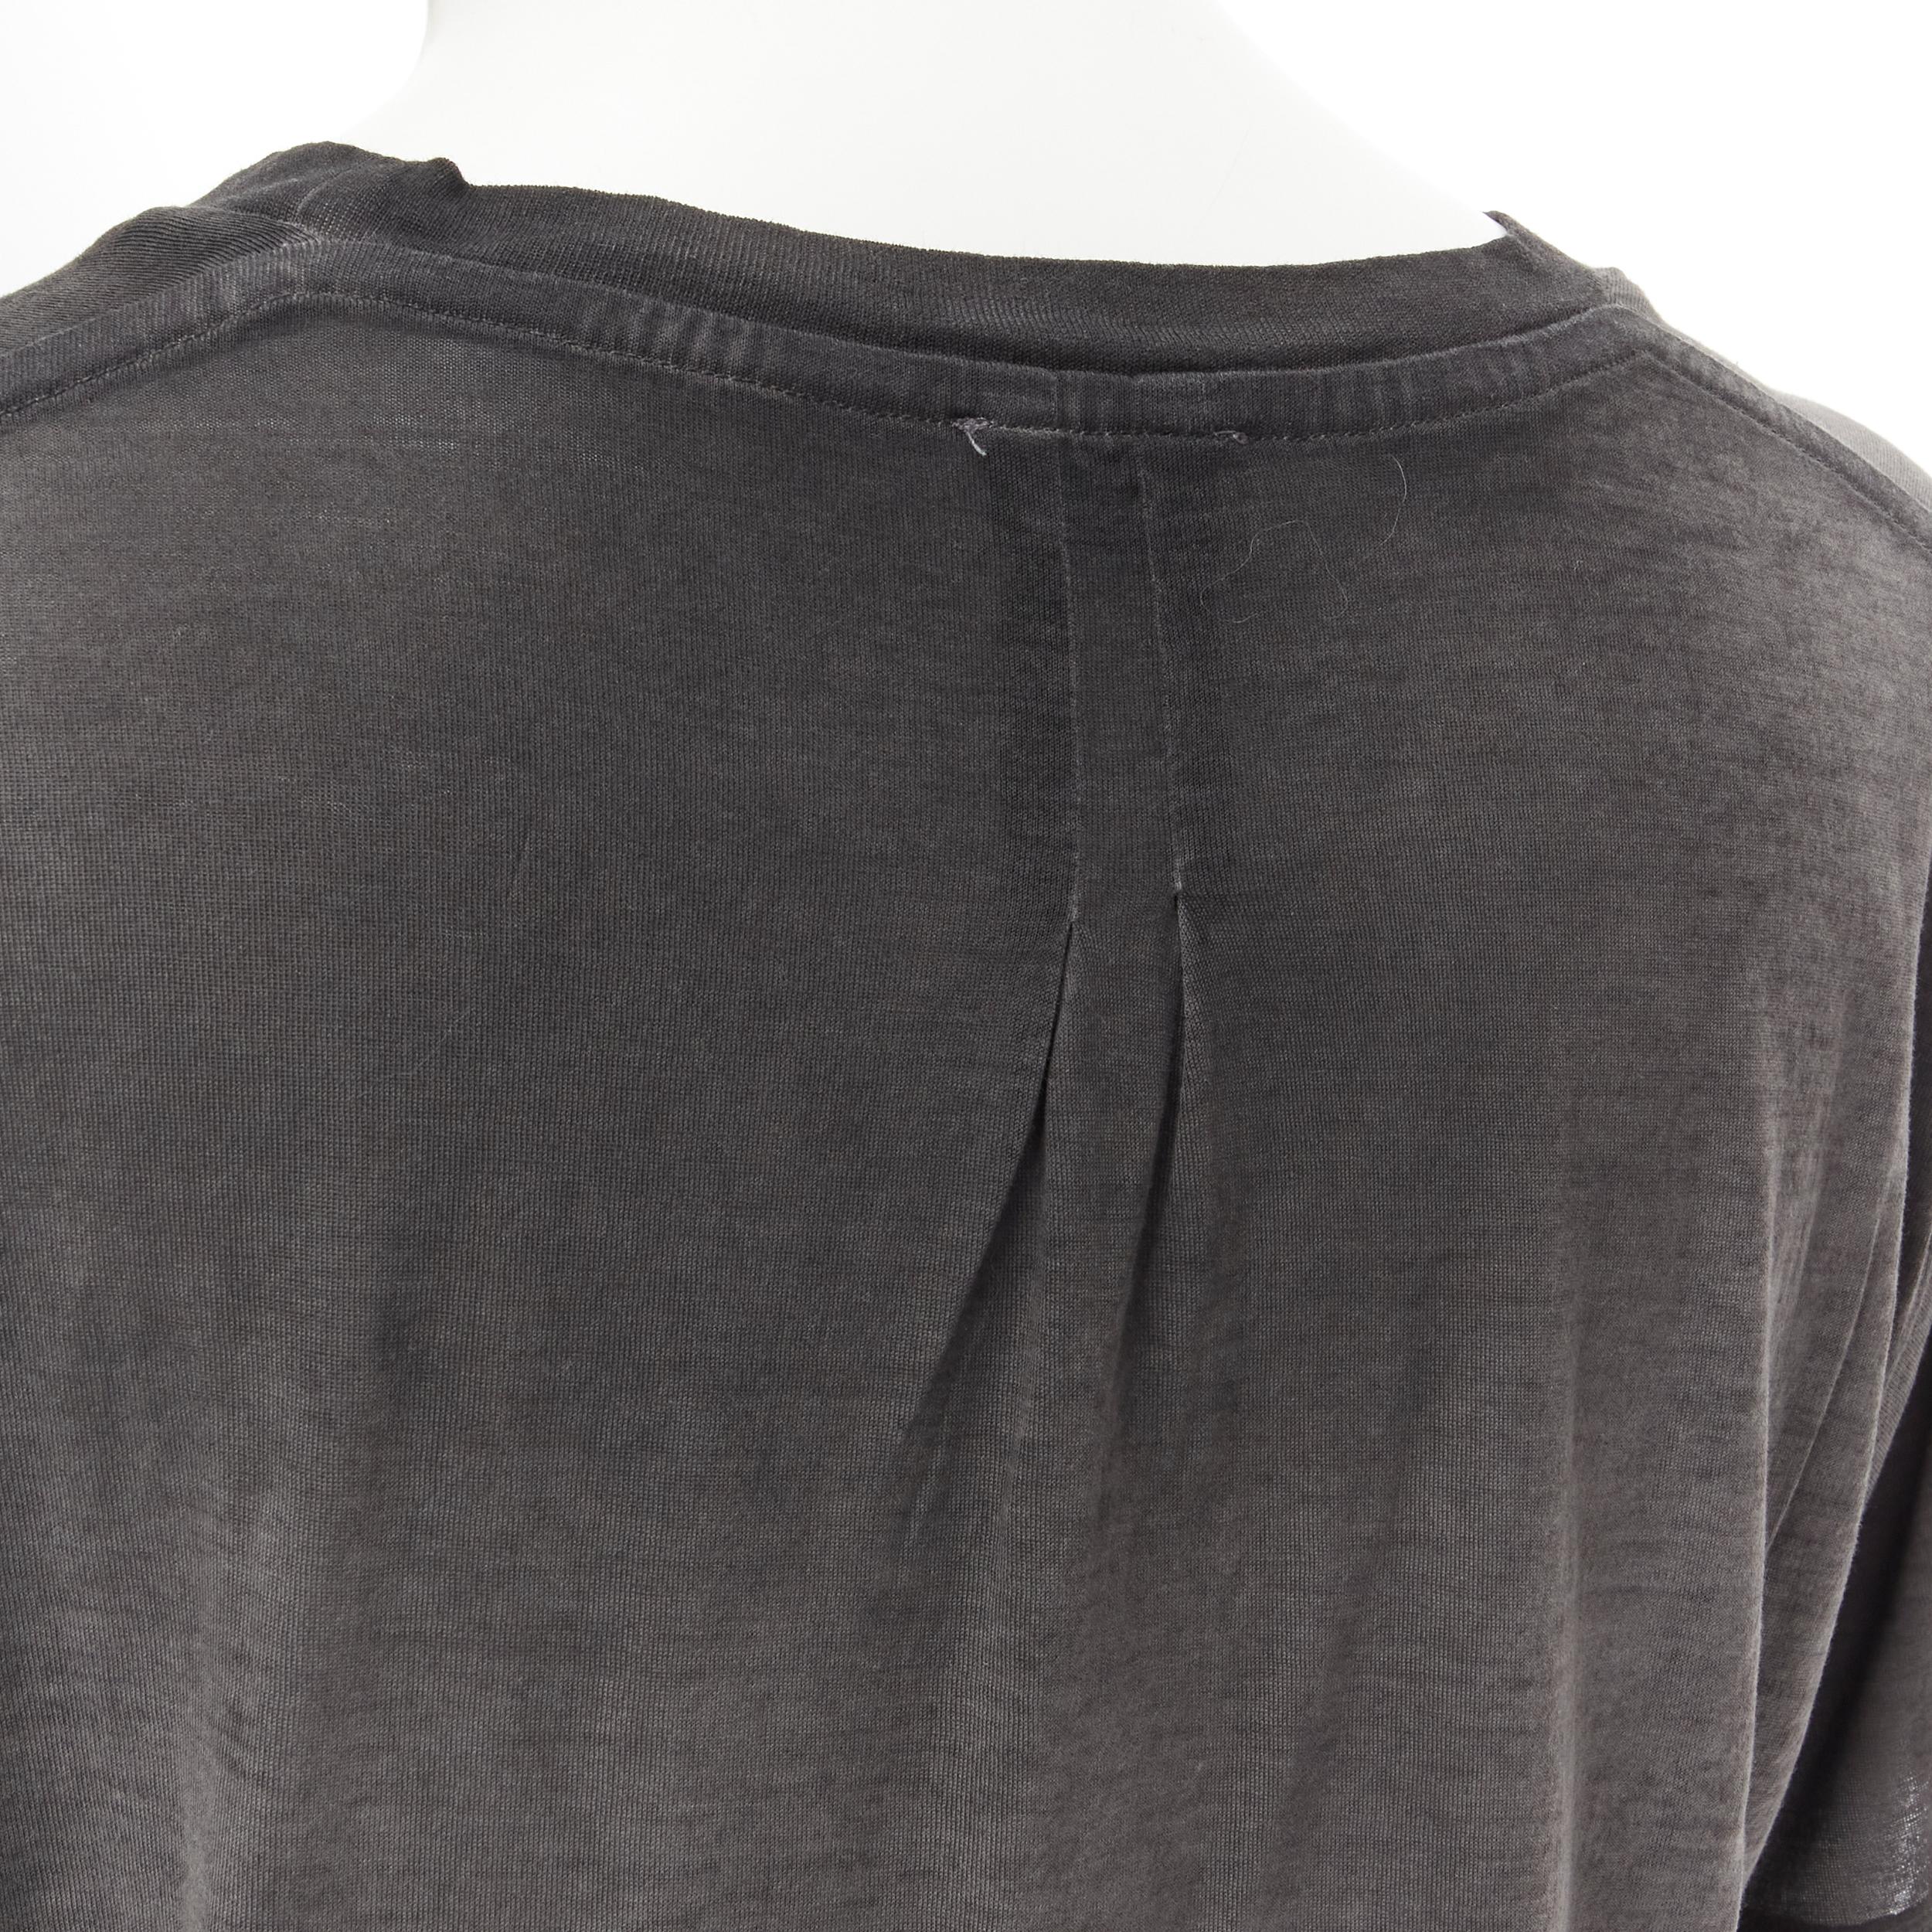 SAINT LAURENT Hedi Slimane 2015 grey washed chest pocket relaxed oversized  For Sale 1